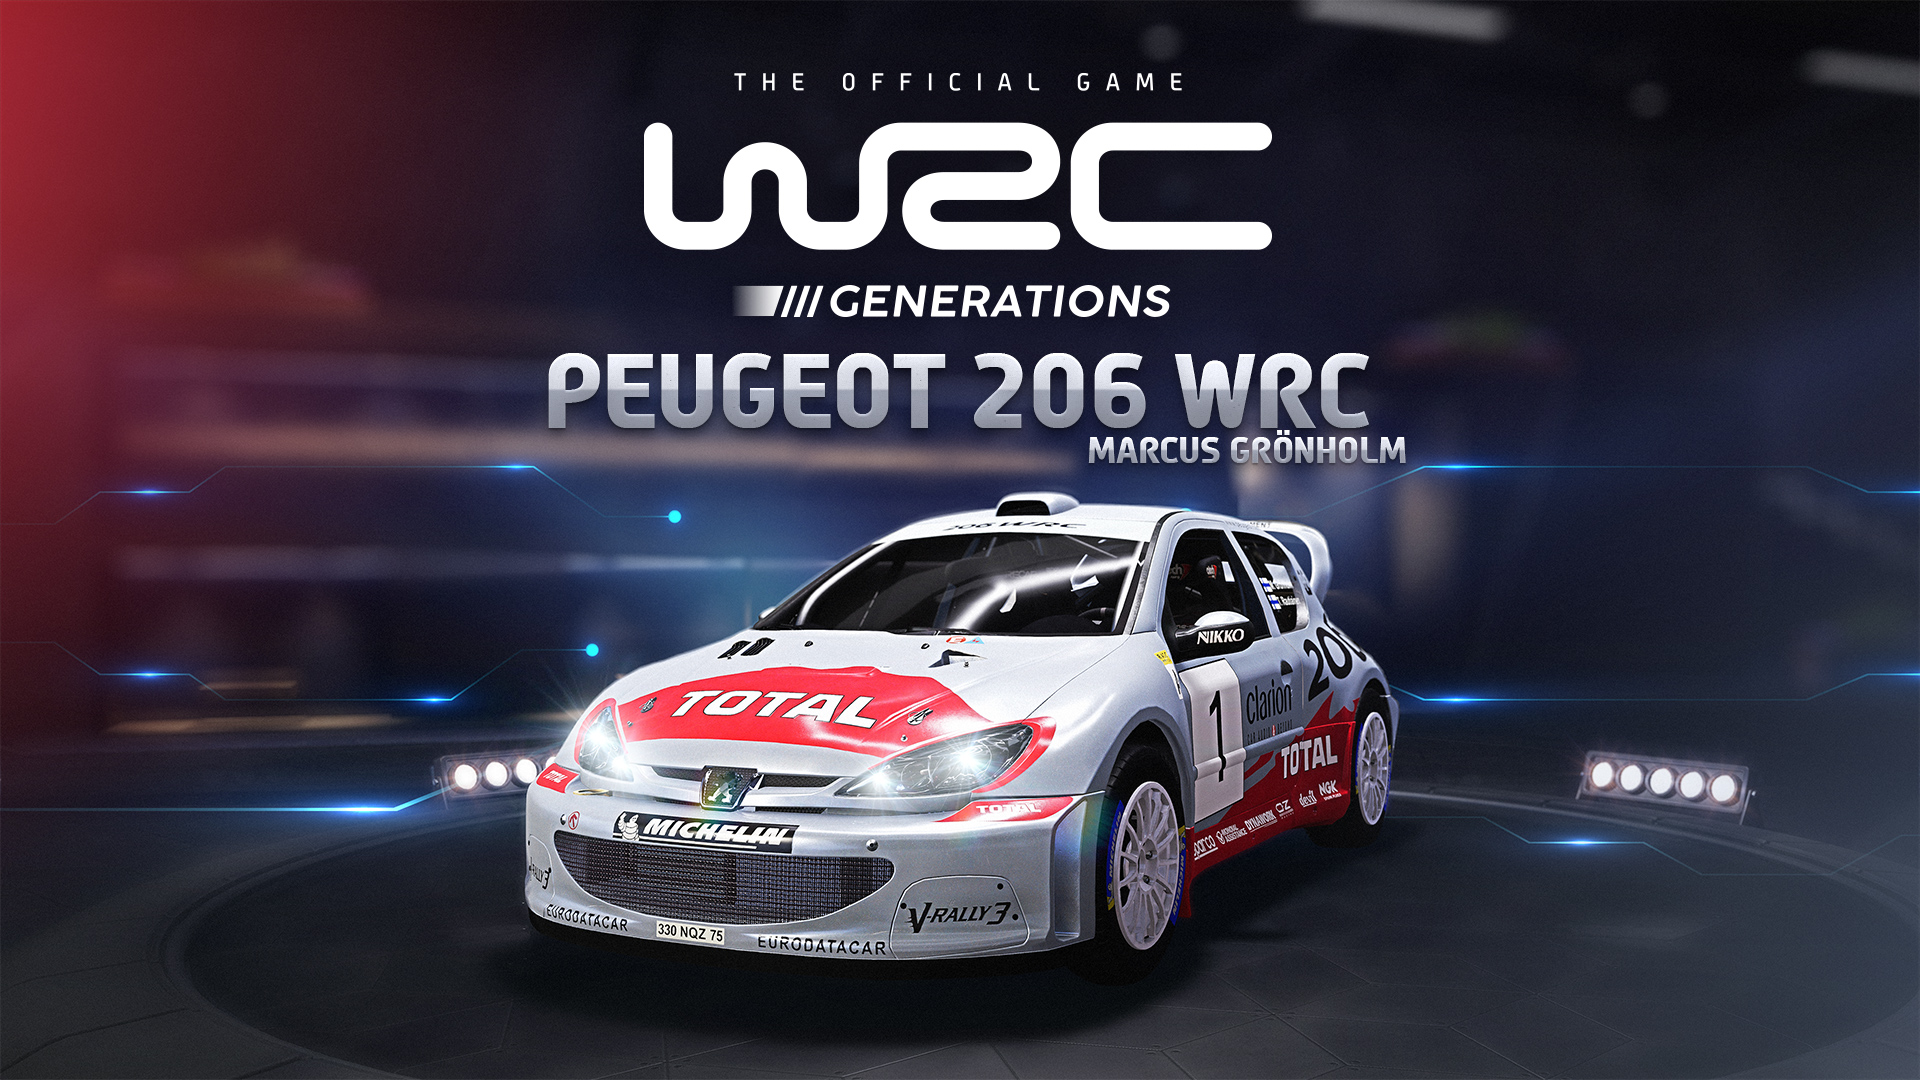 WRC 10 for PlayStation 5